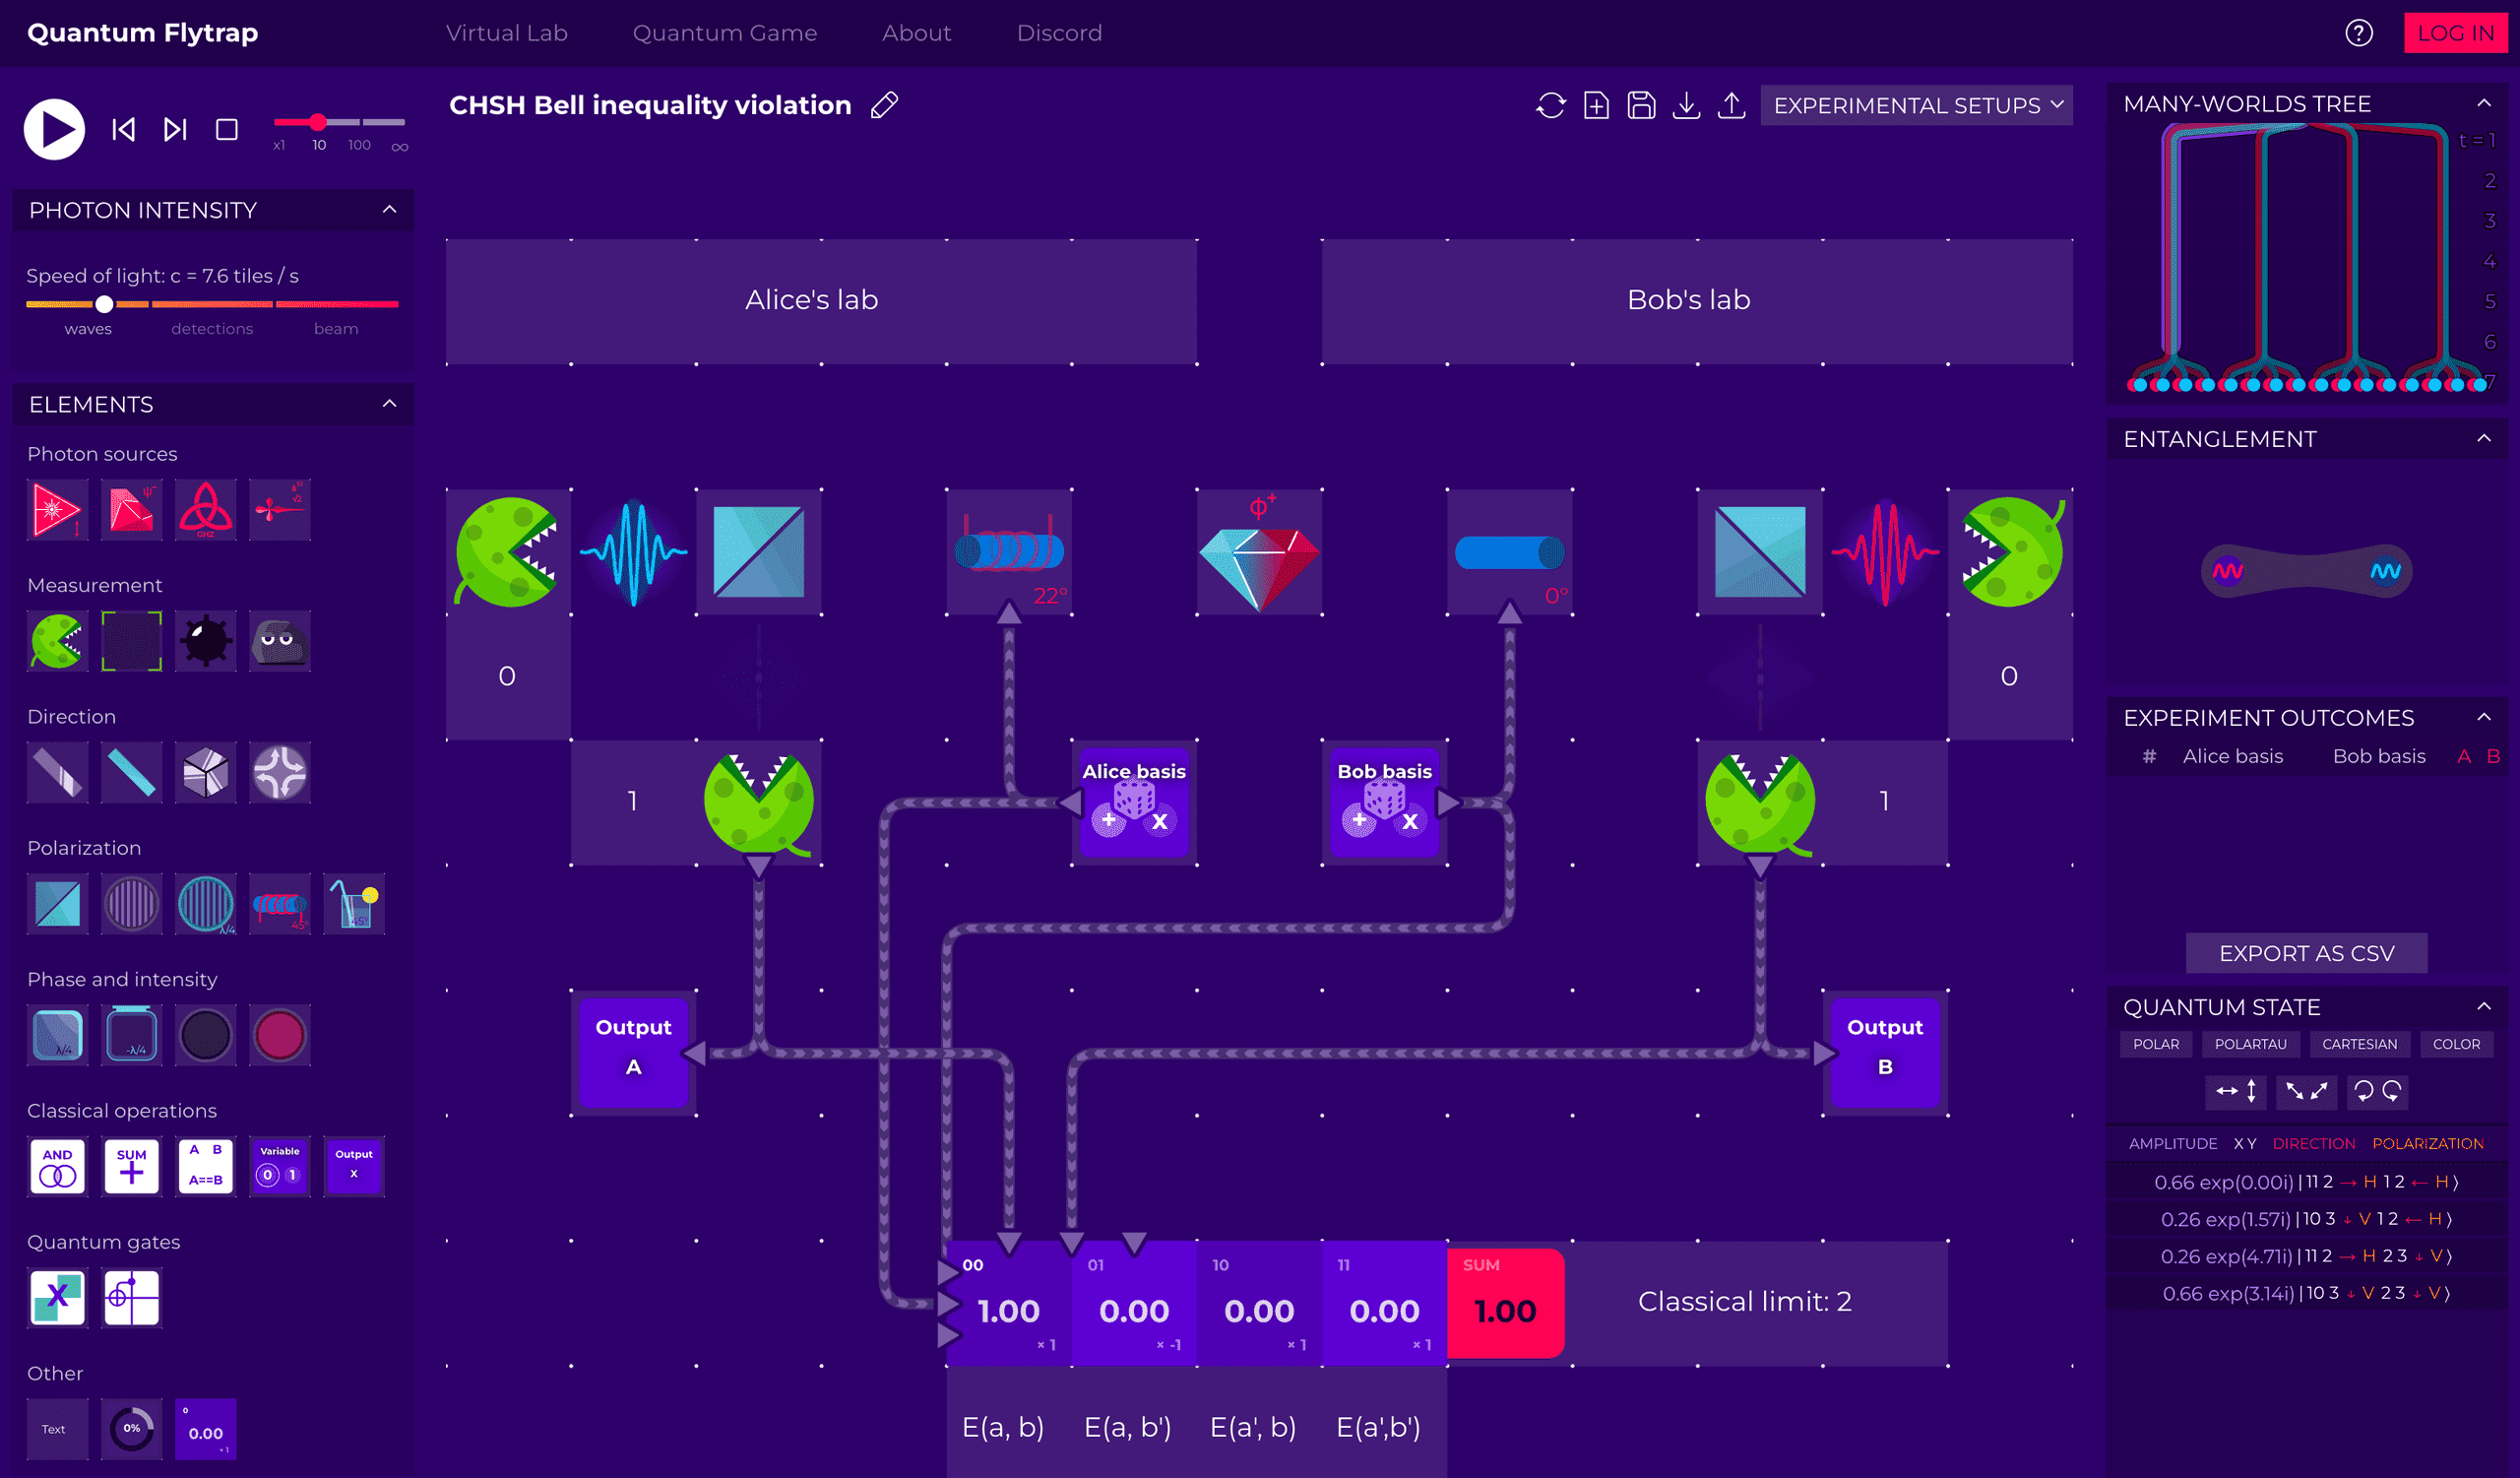 Virtual Lab by Quantum Flytrap - interface redesign screenshot